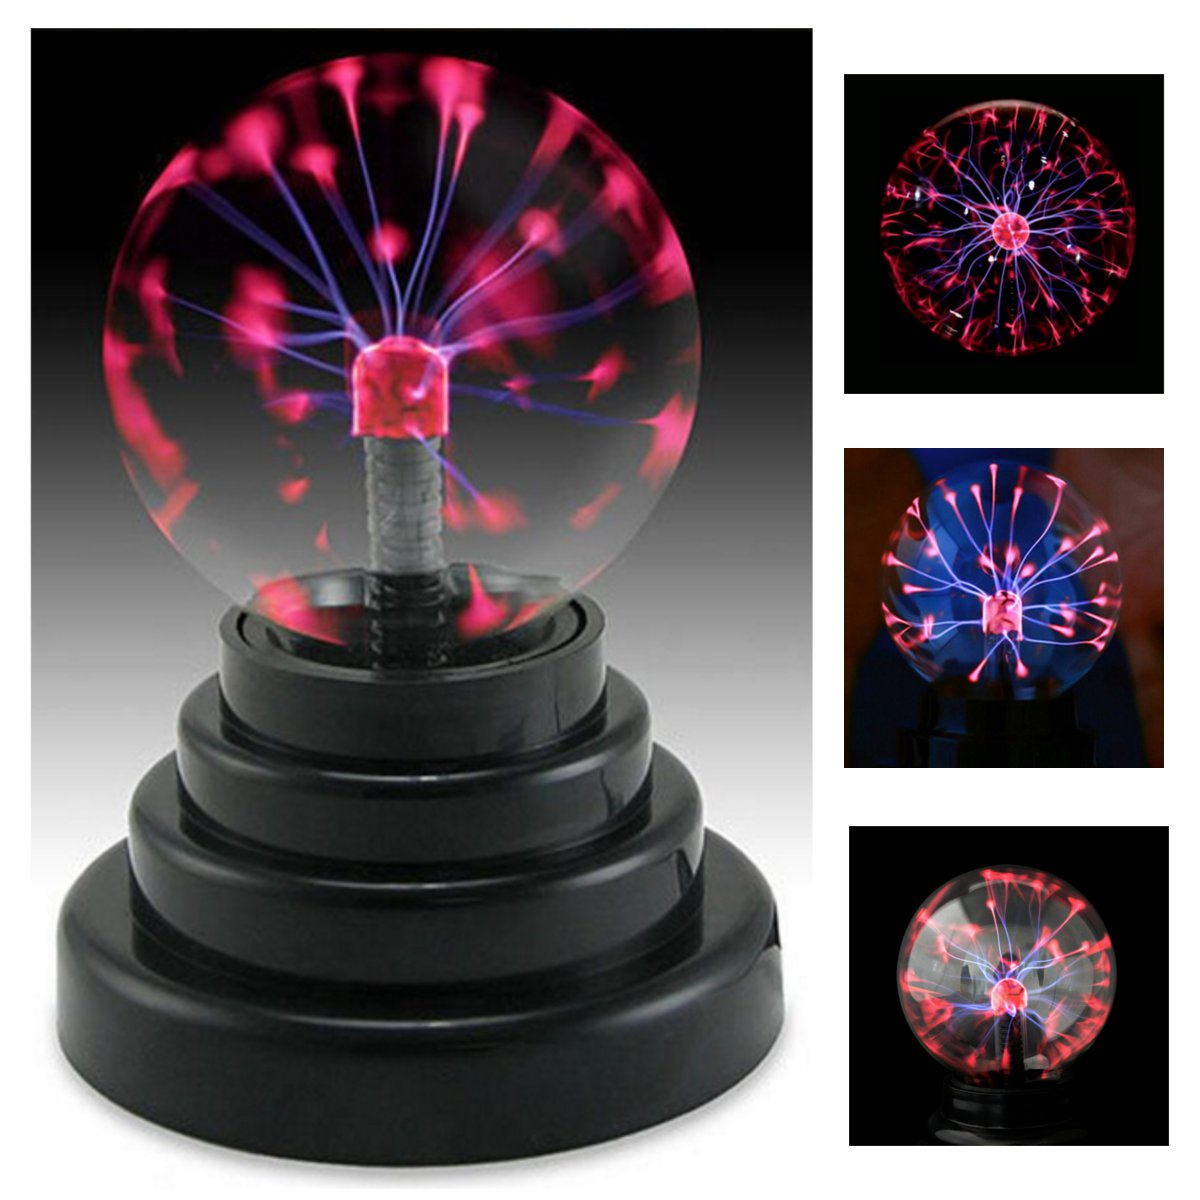 3-Inch-Butterfly-Plasma-Ball-Light-Table-Lamp-Cool-Magic-Fun-Science-Electricity-Desktop-Decor-1459285